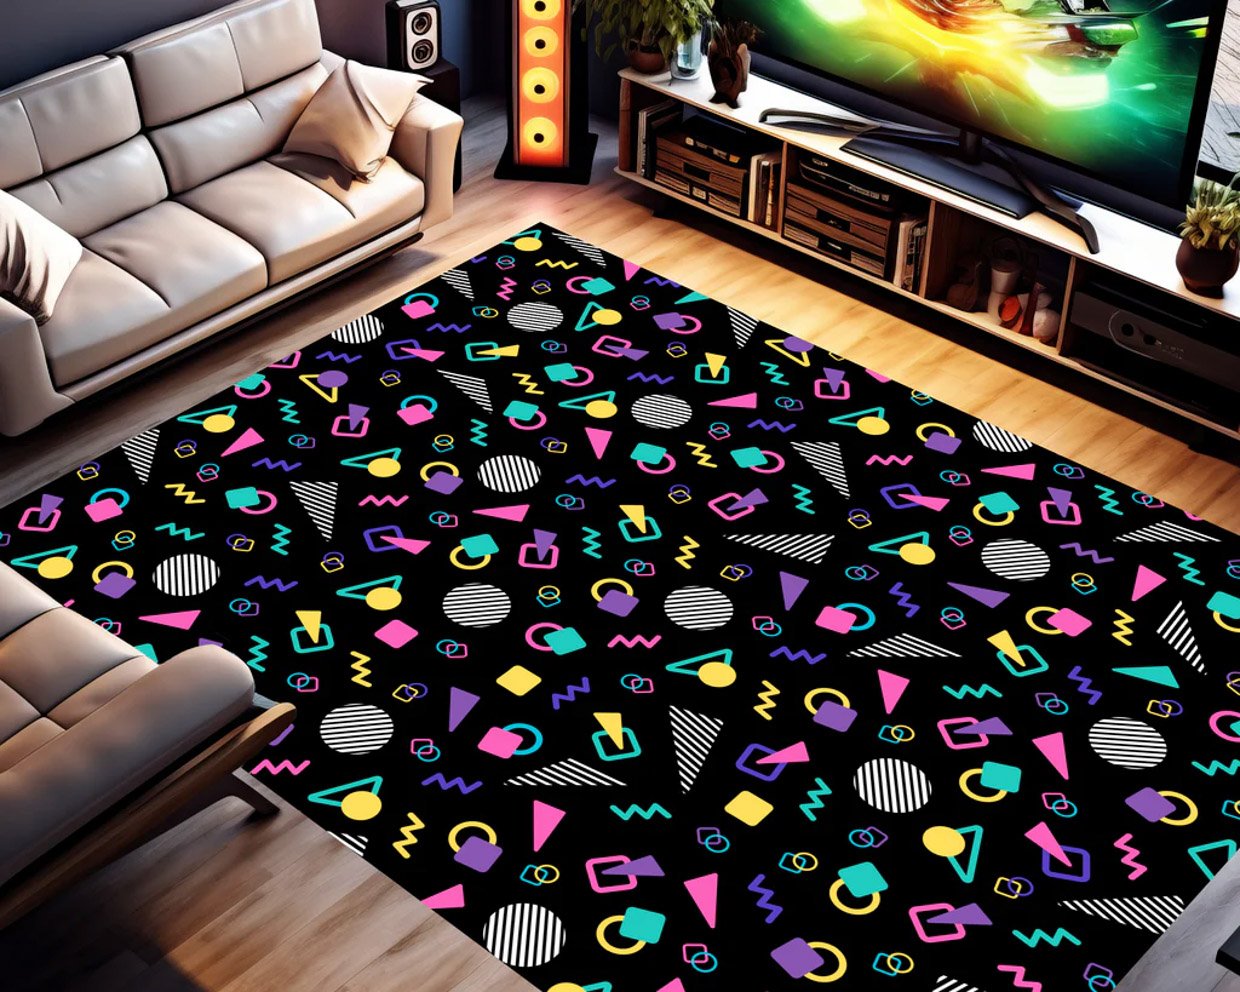 Retro Game Room Carpets